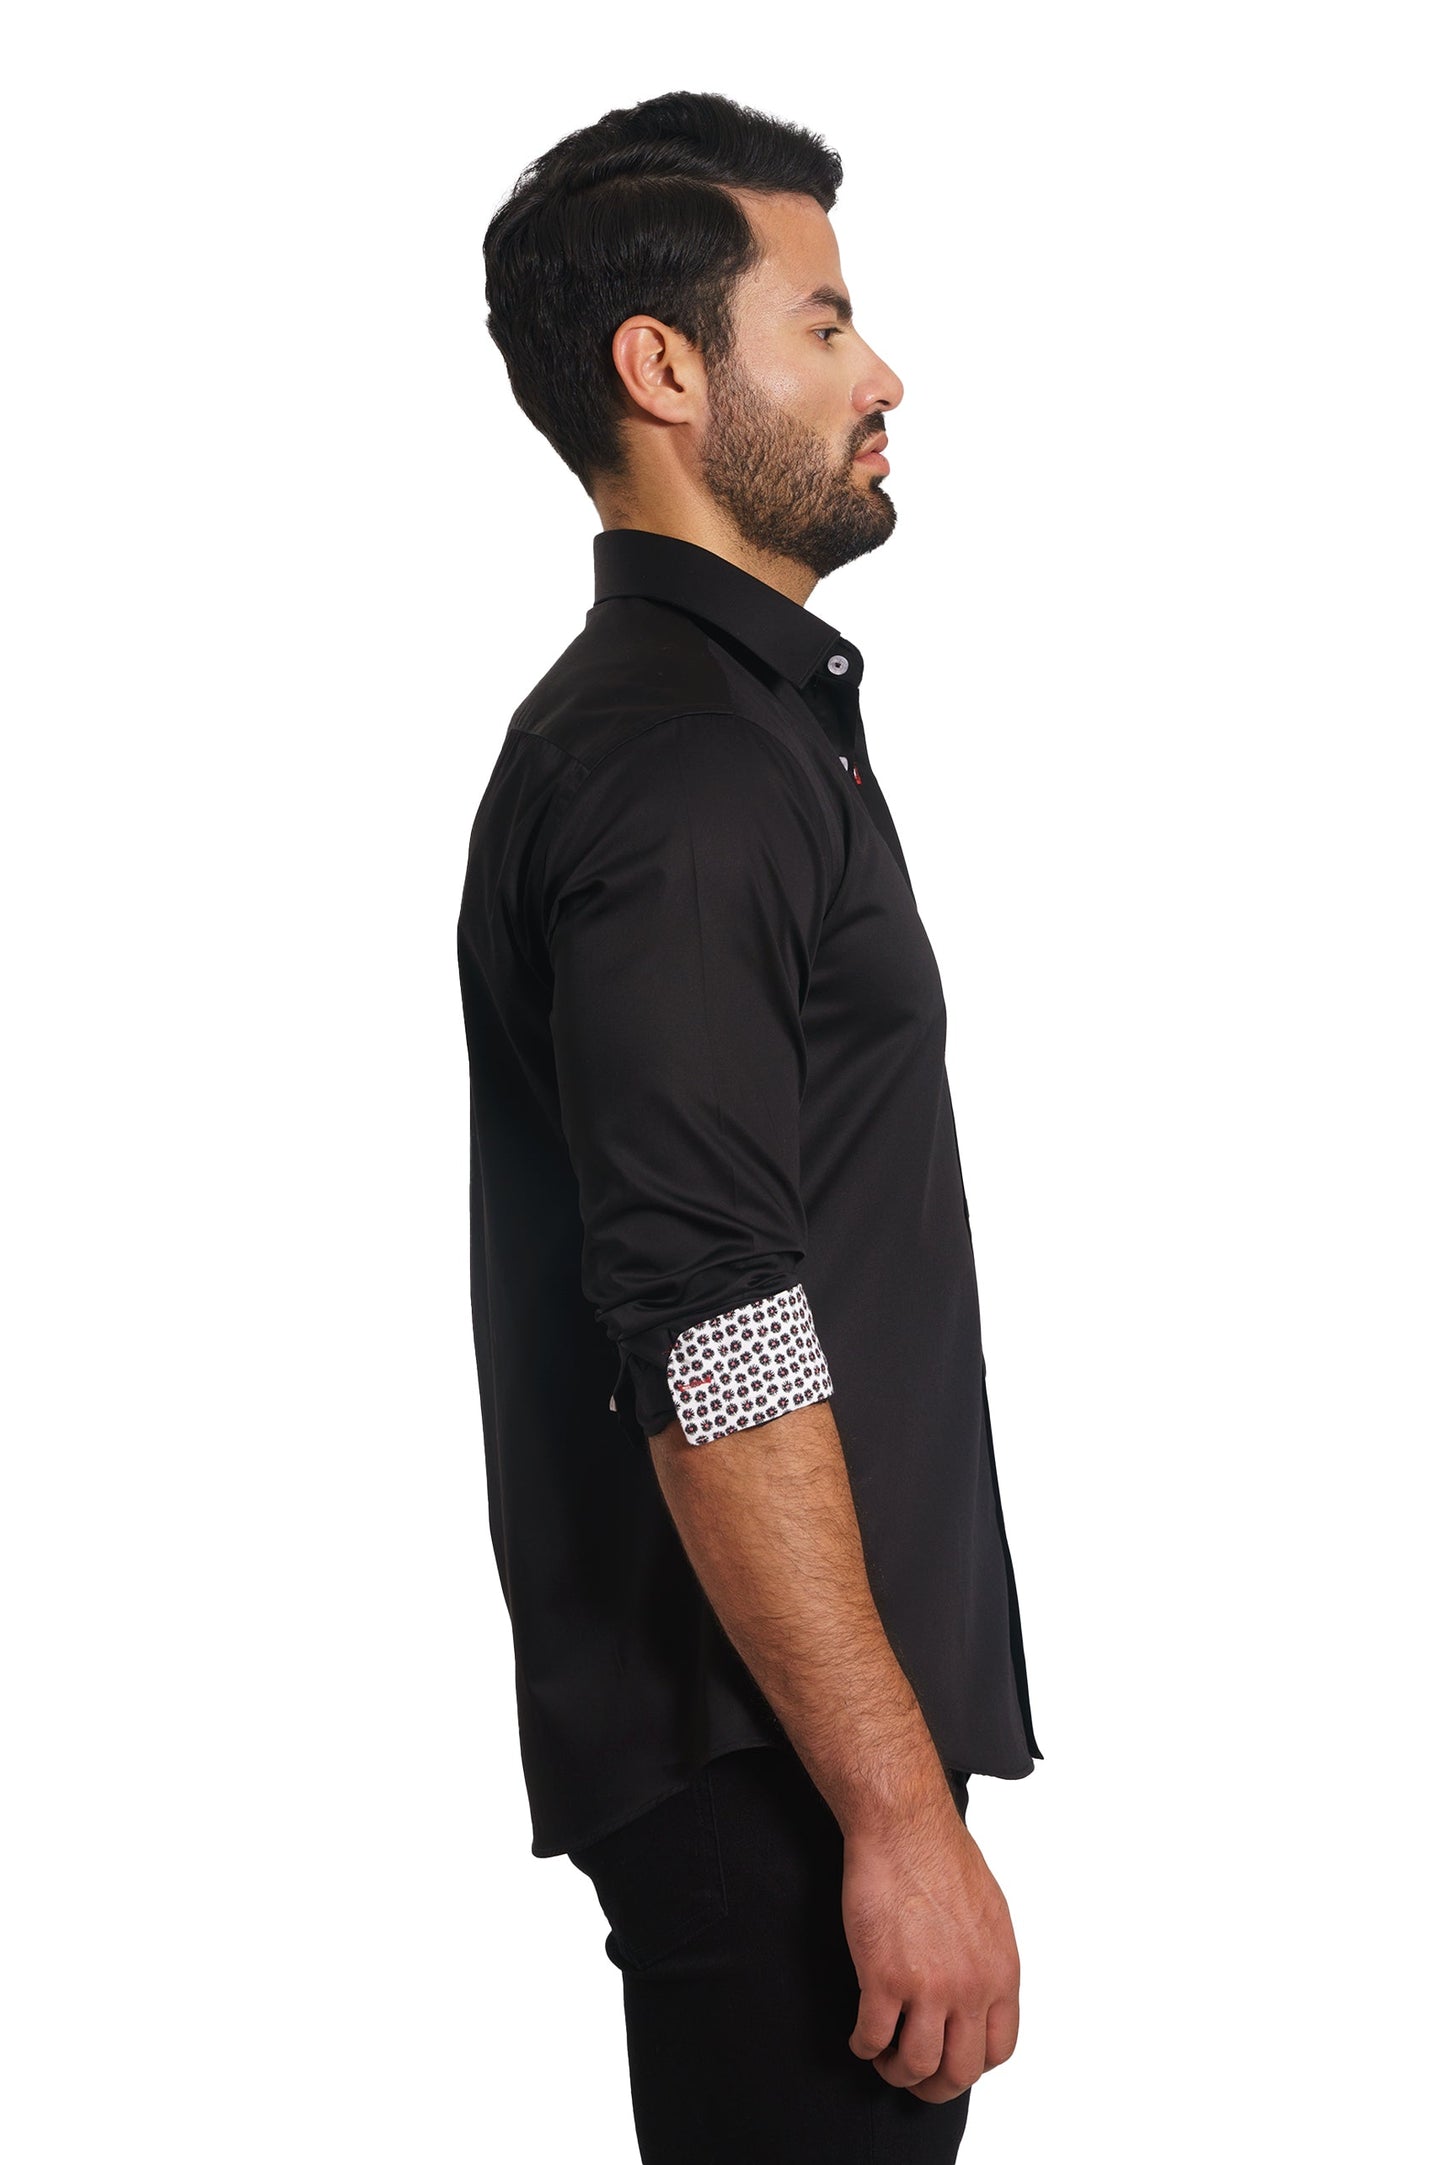 Black Long Sleeve Shirt TH-2869 Side